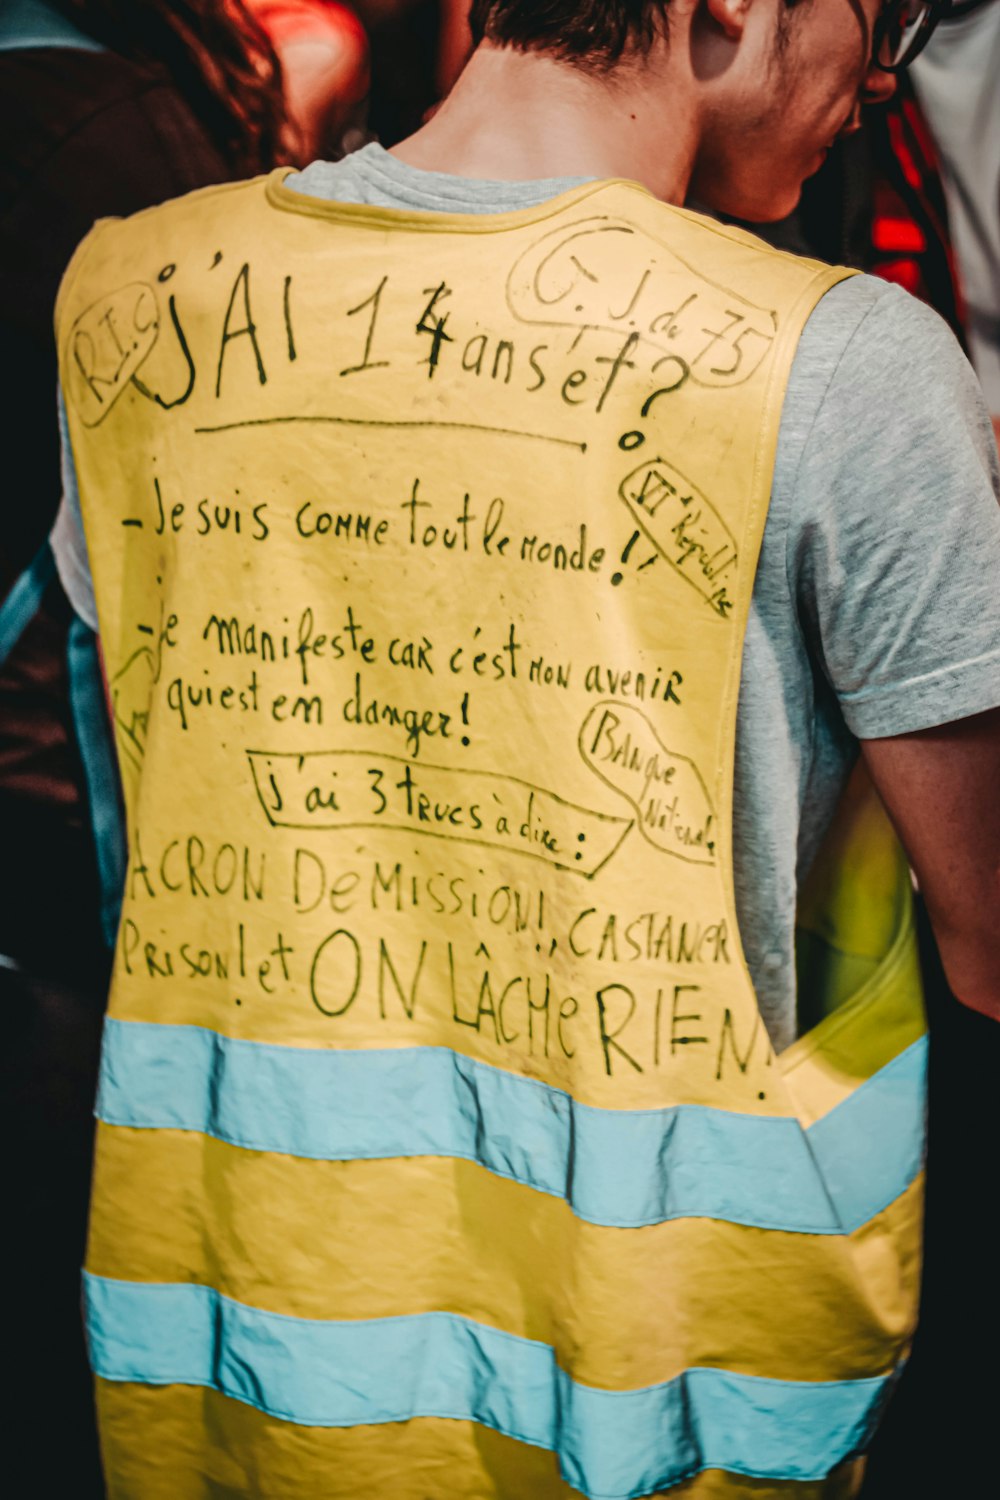 man wearing yellow vest